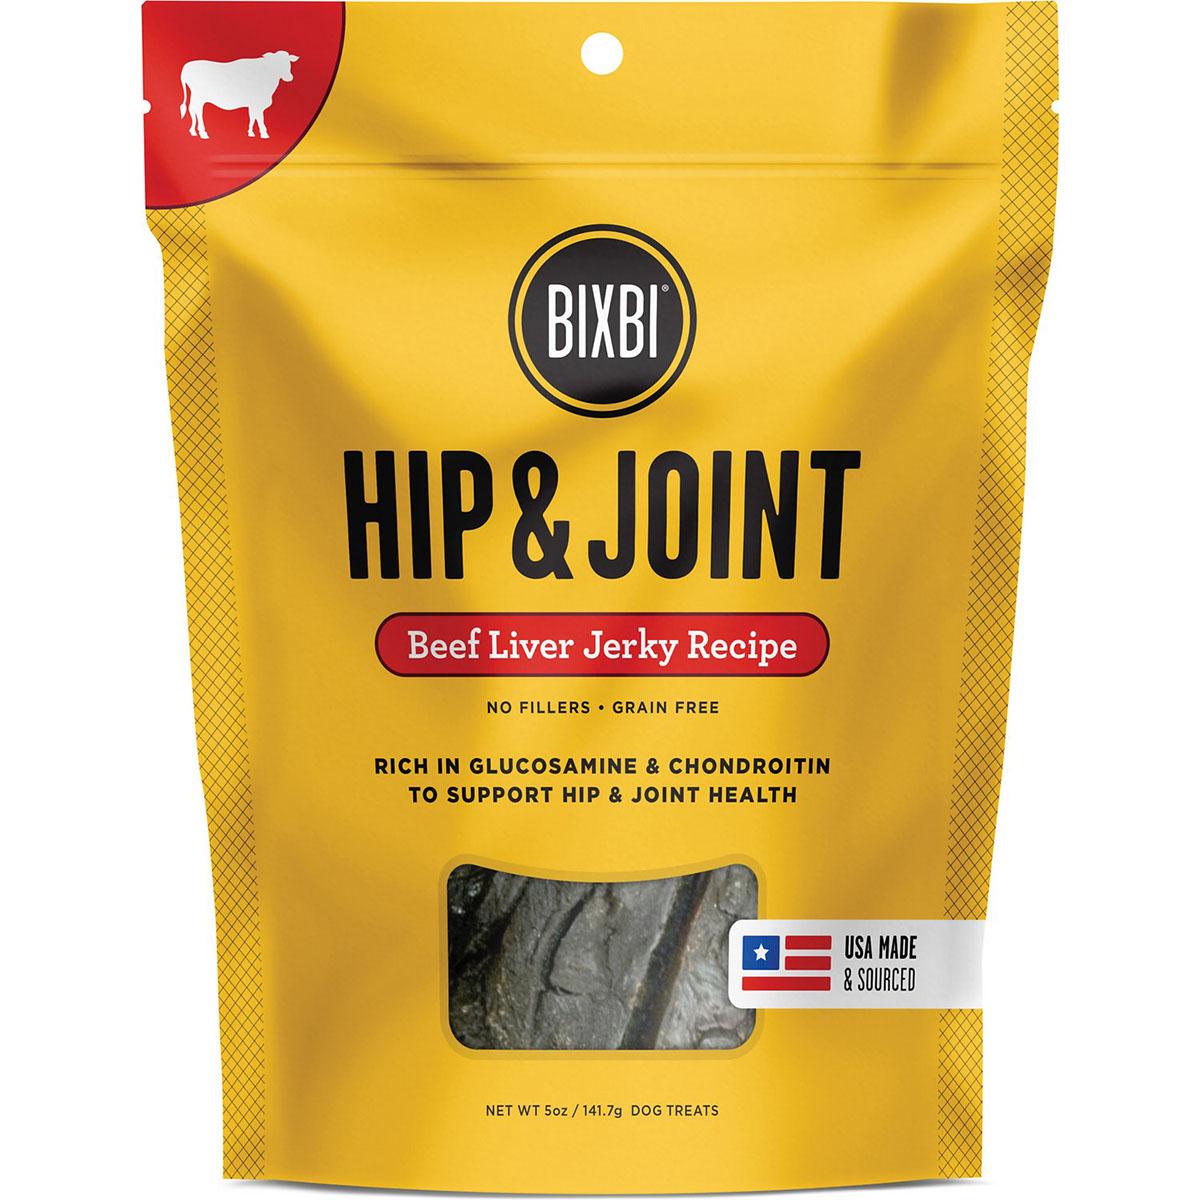 bixbi-hip-joint-beef-liver-jerky-recipe-dog-treats